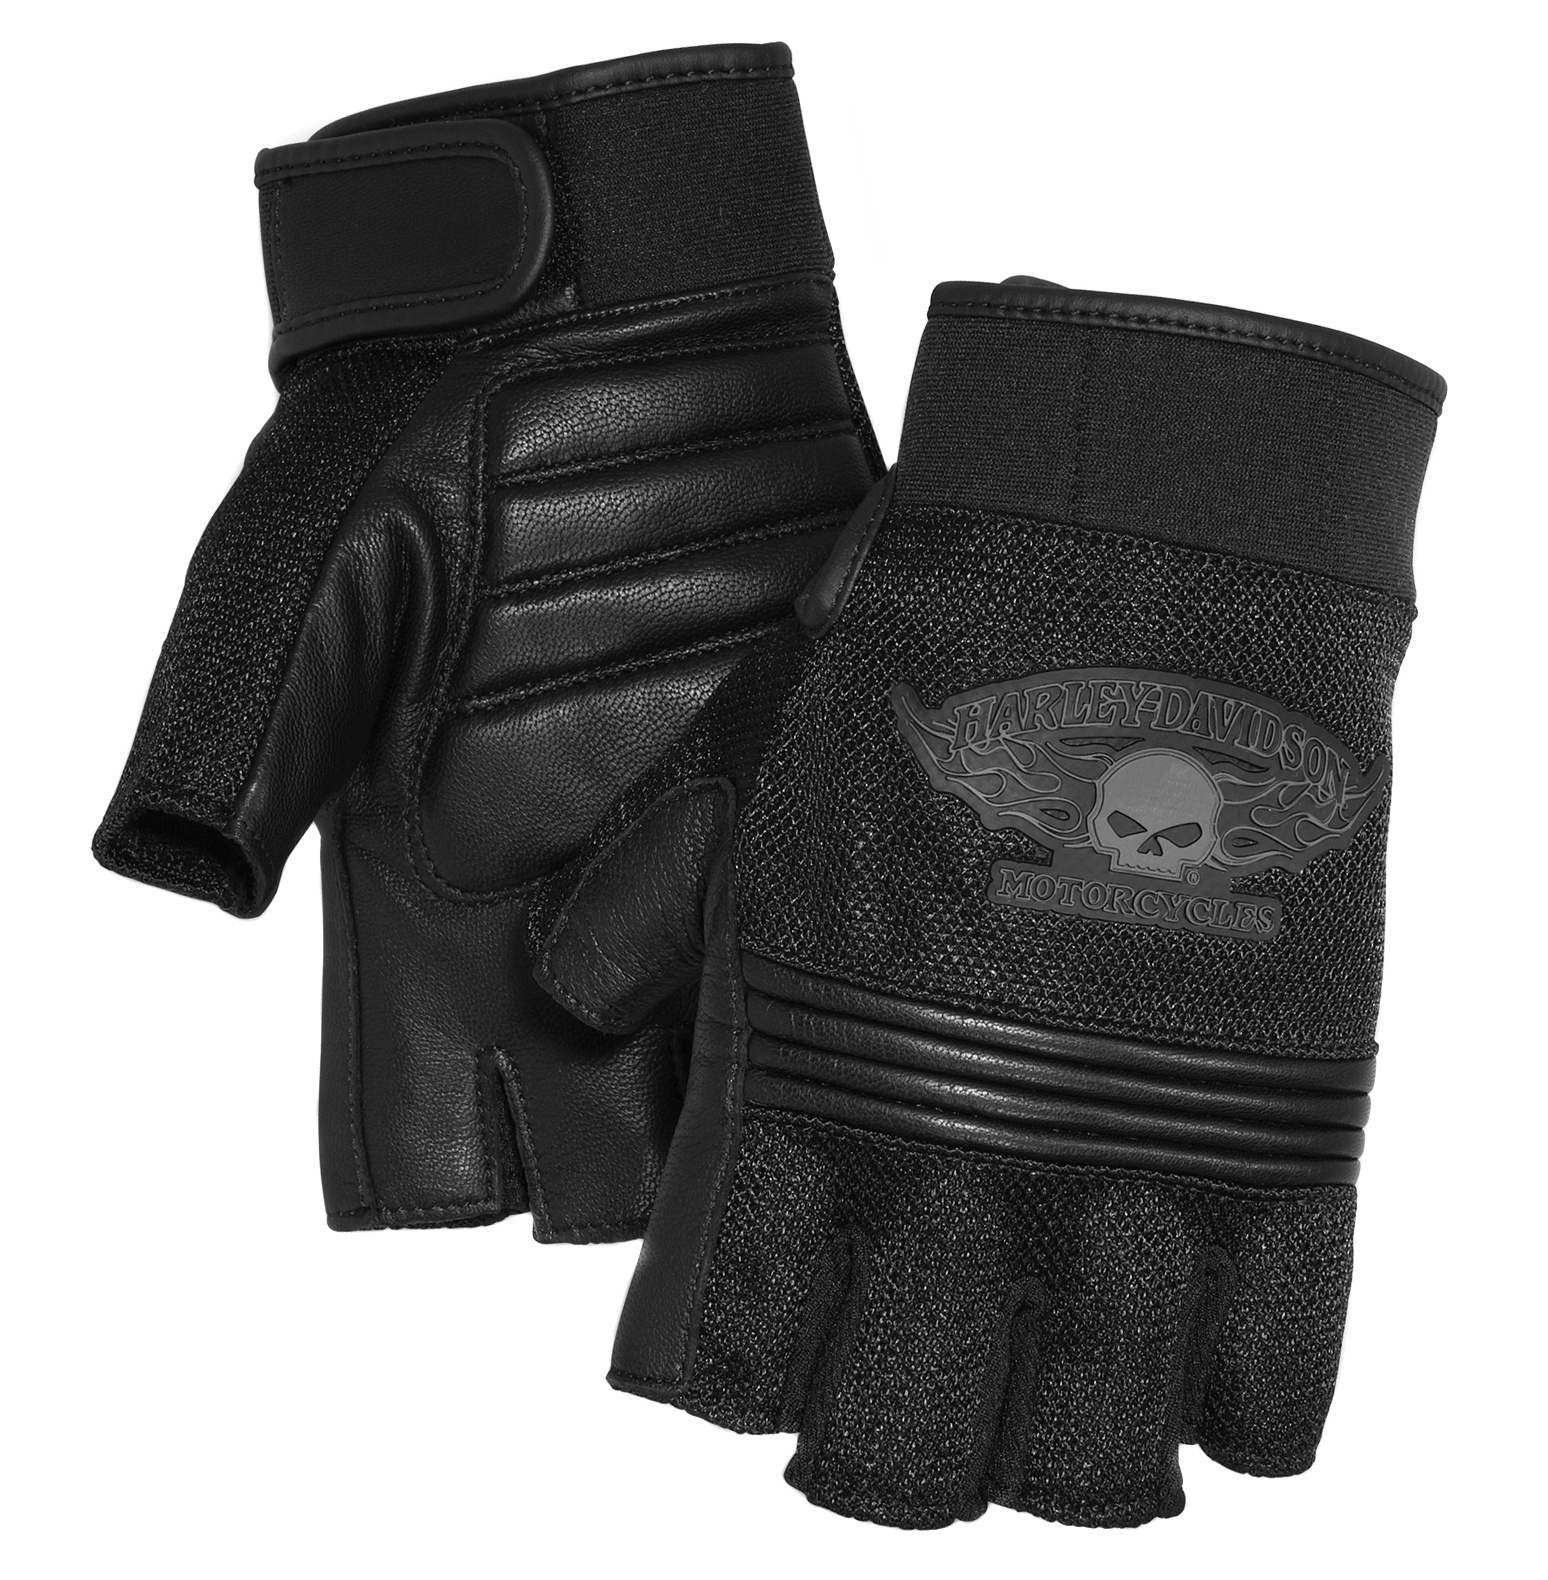 Harley Davidson Fingerless Motorcycle Gloves Promotion Off70